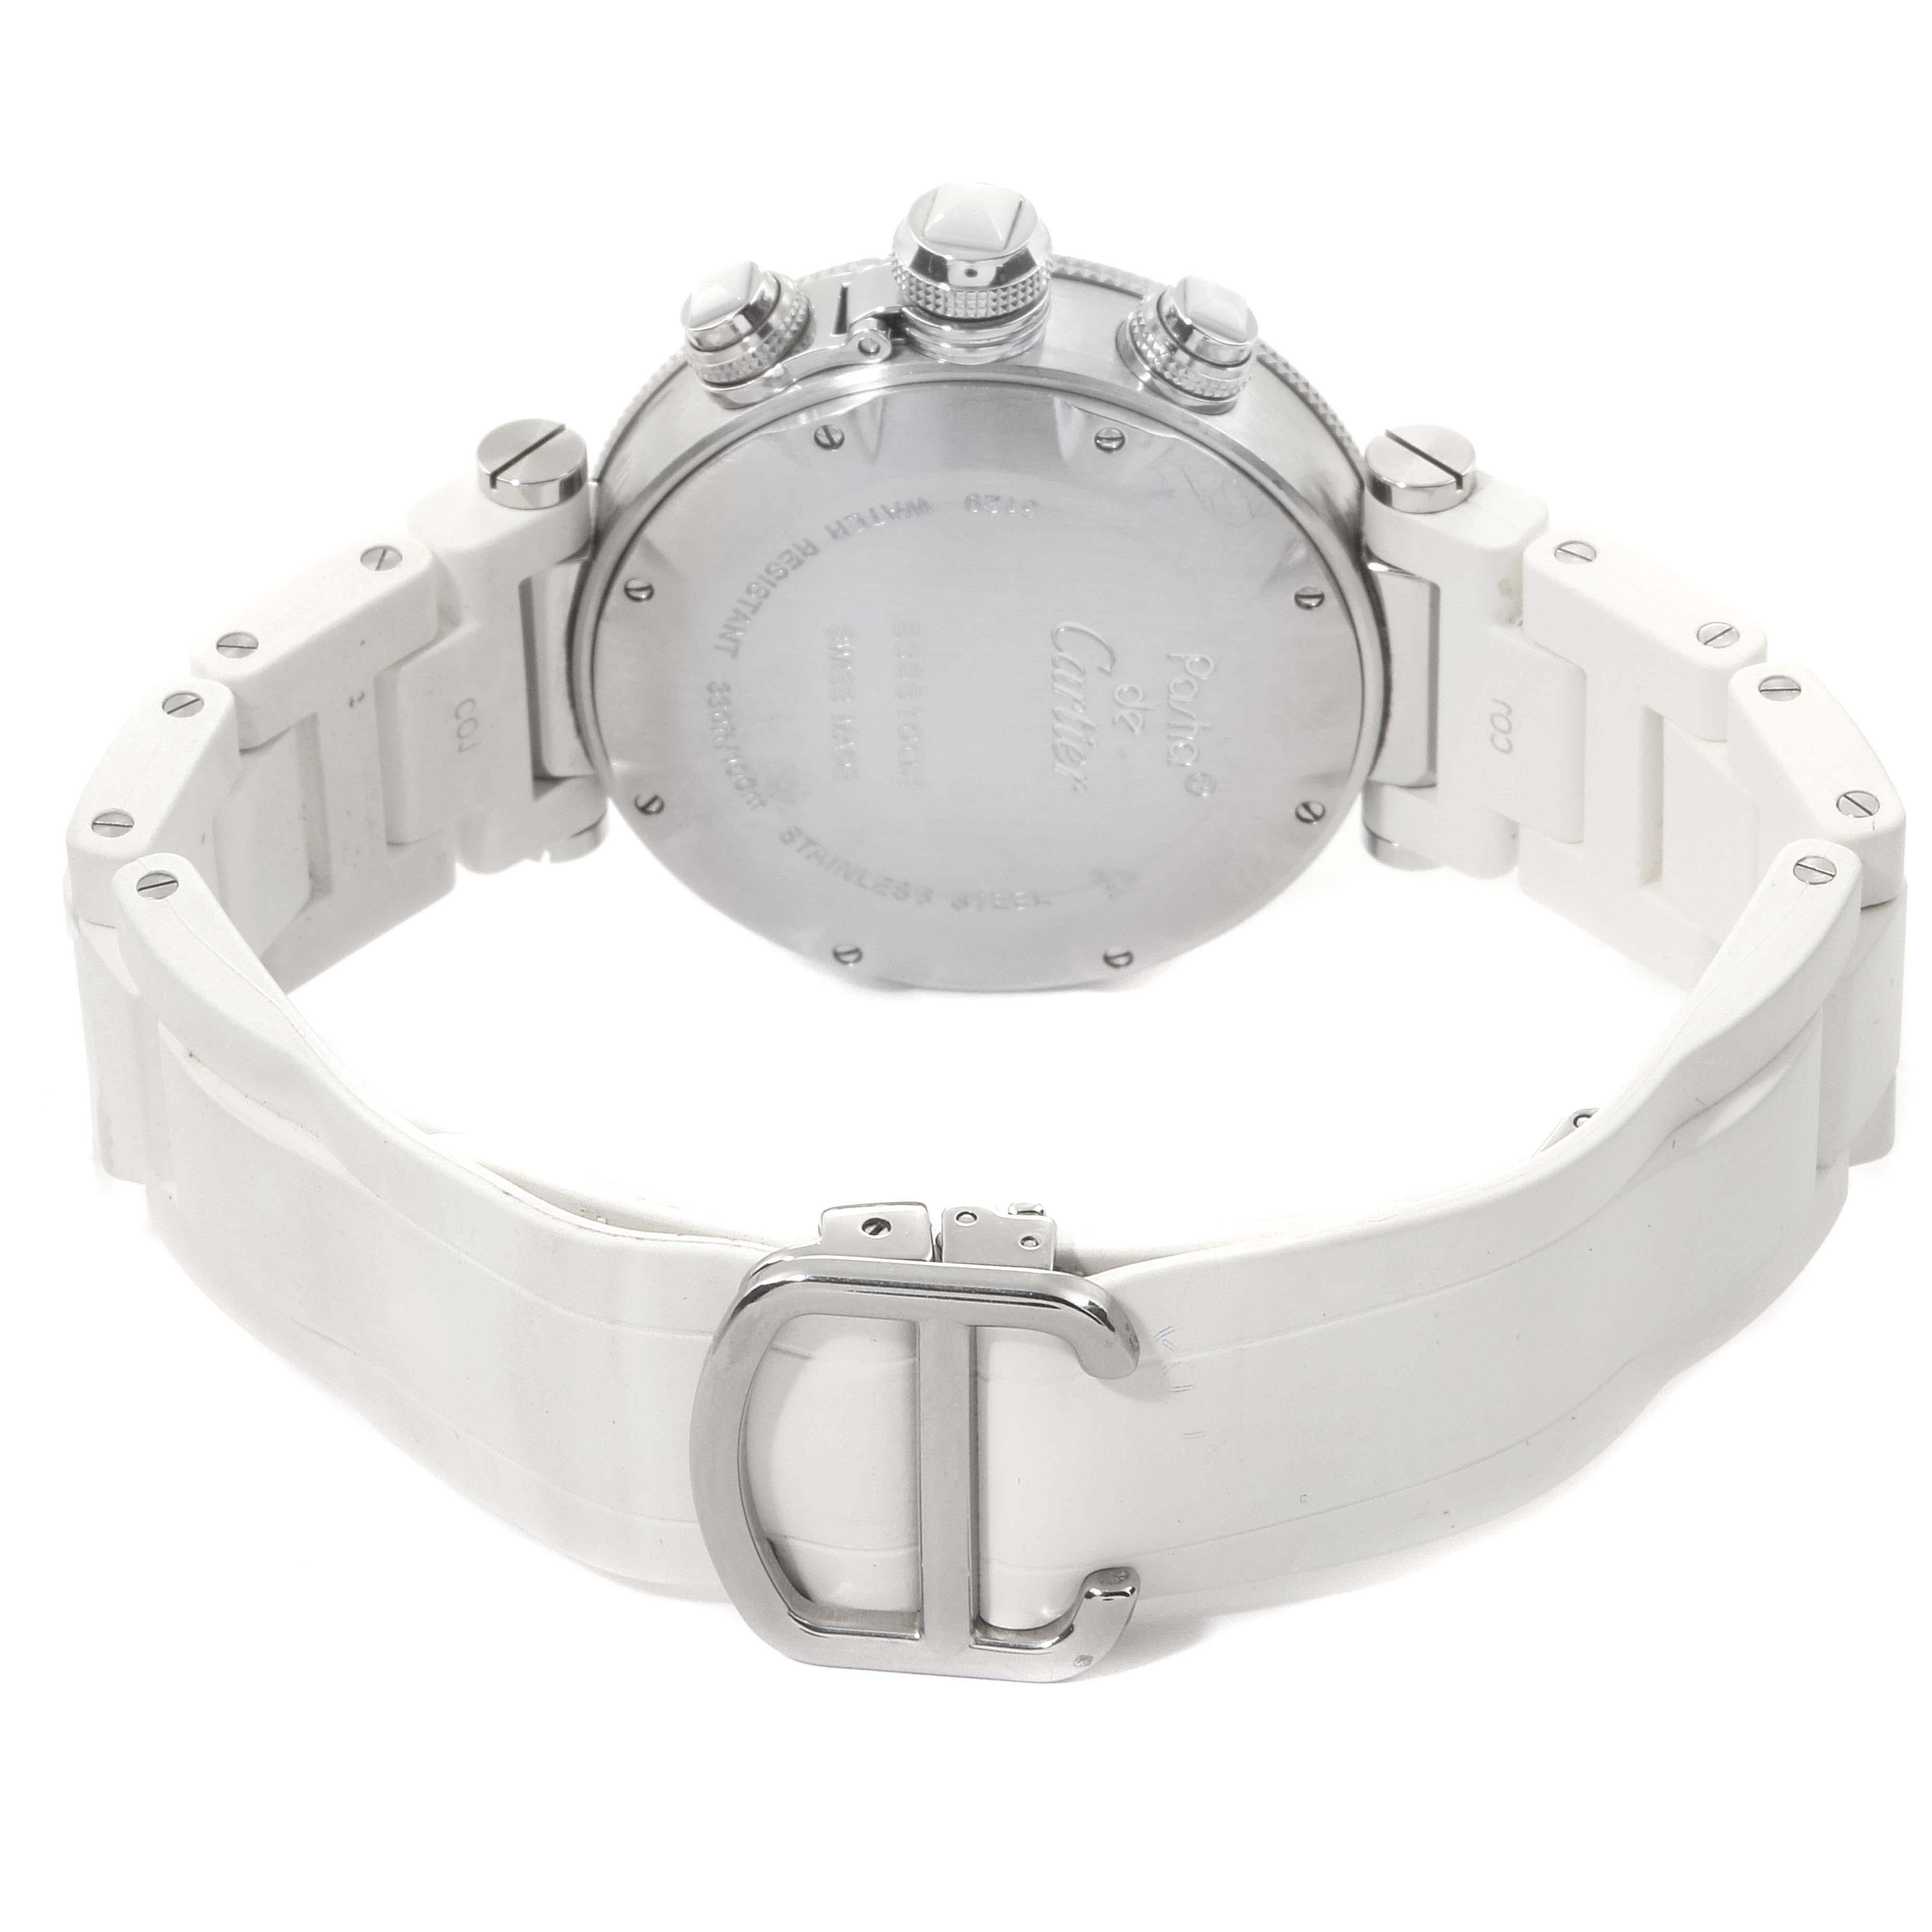 Cartier Pasha Seatimer Chronograph Rubber Strap Ladies Watch W3140005 3